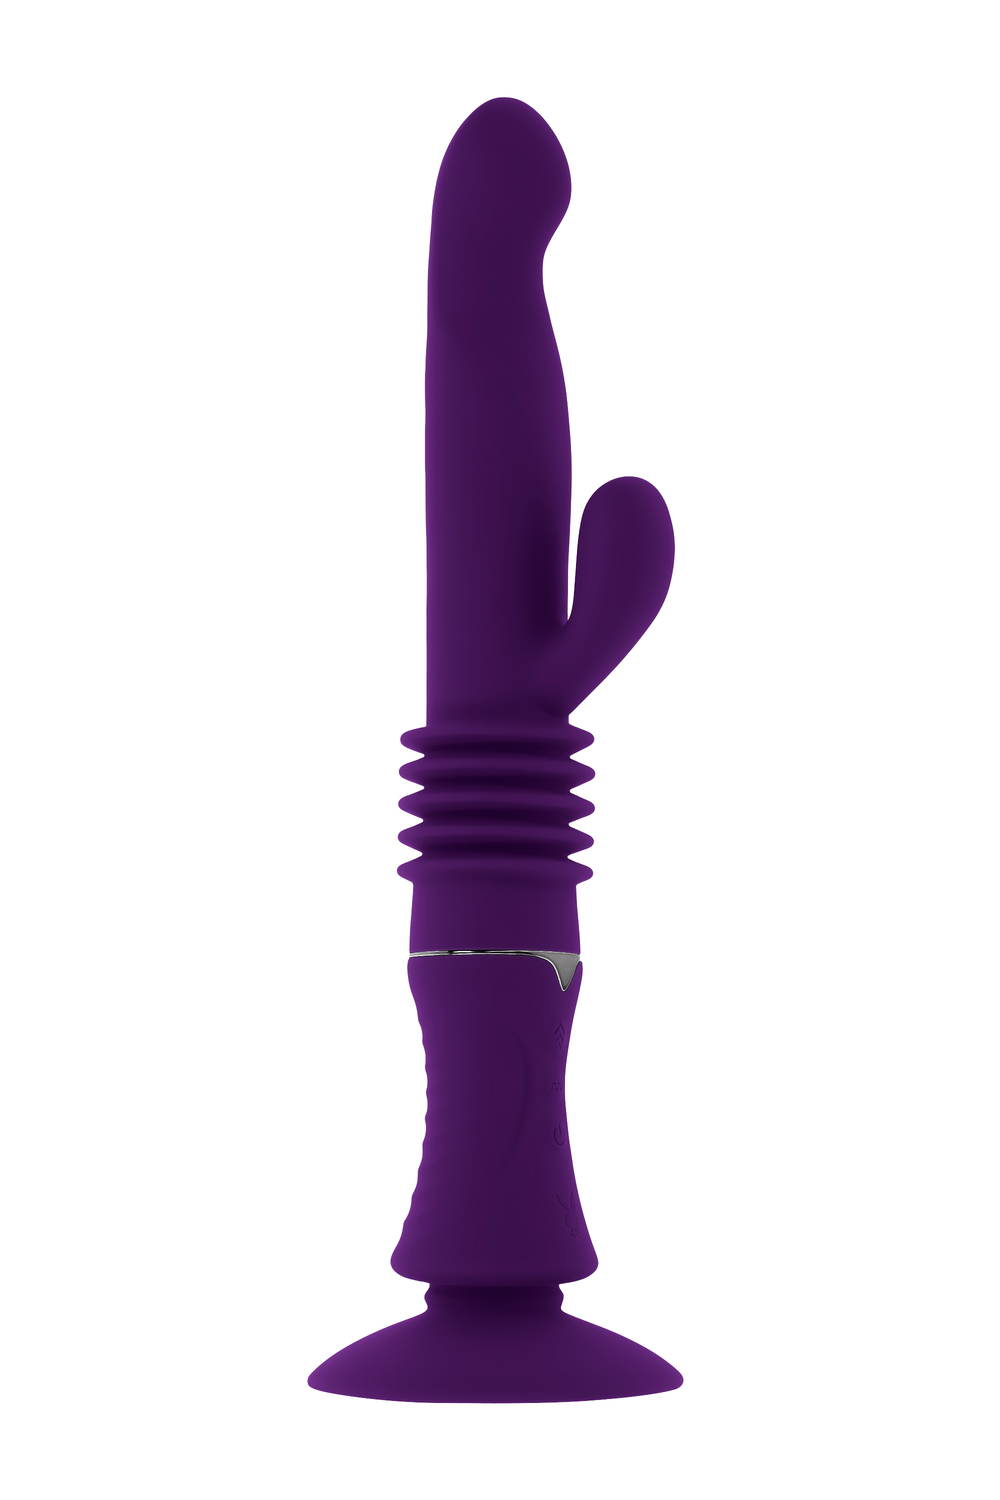 Vibrator Playboy Rabbit Thrusting Hoppy Ending, Silicone, USB, Mov, 28.3 cm